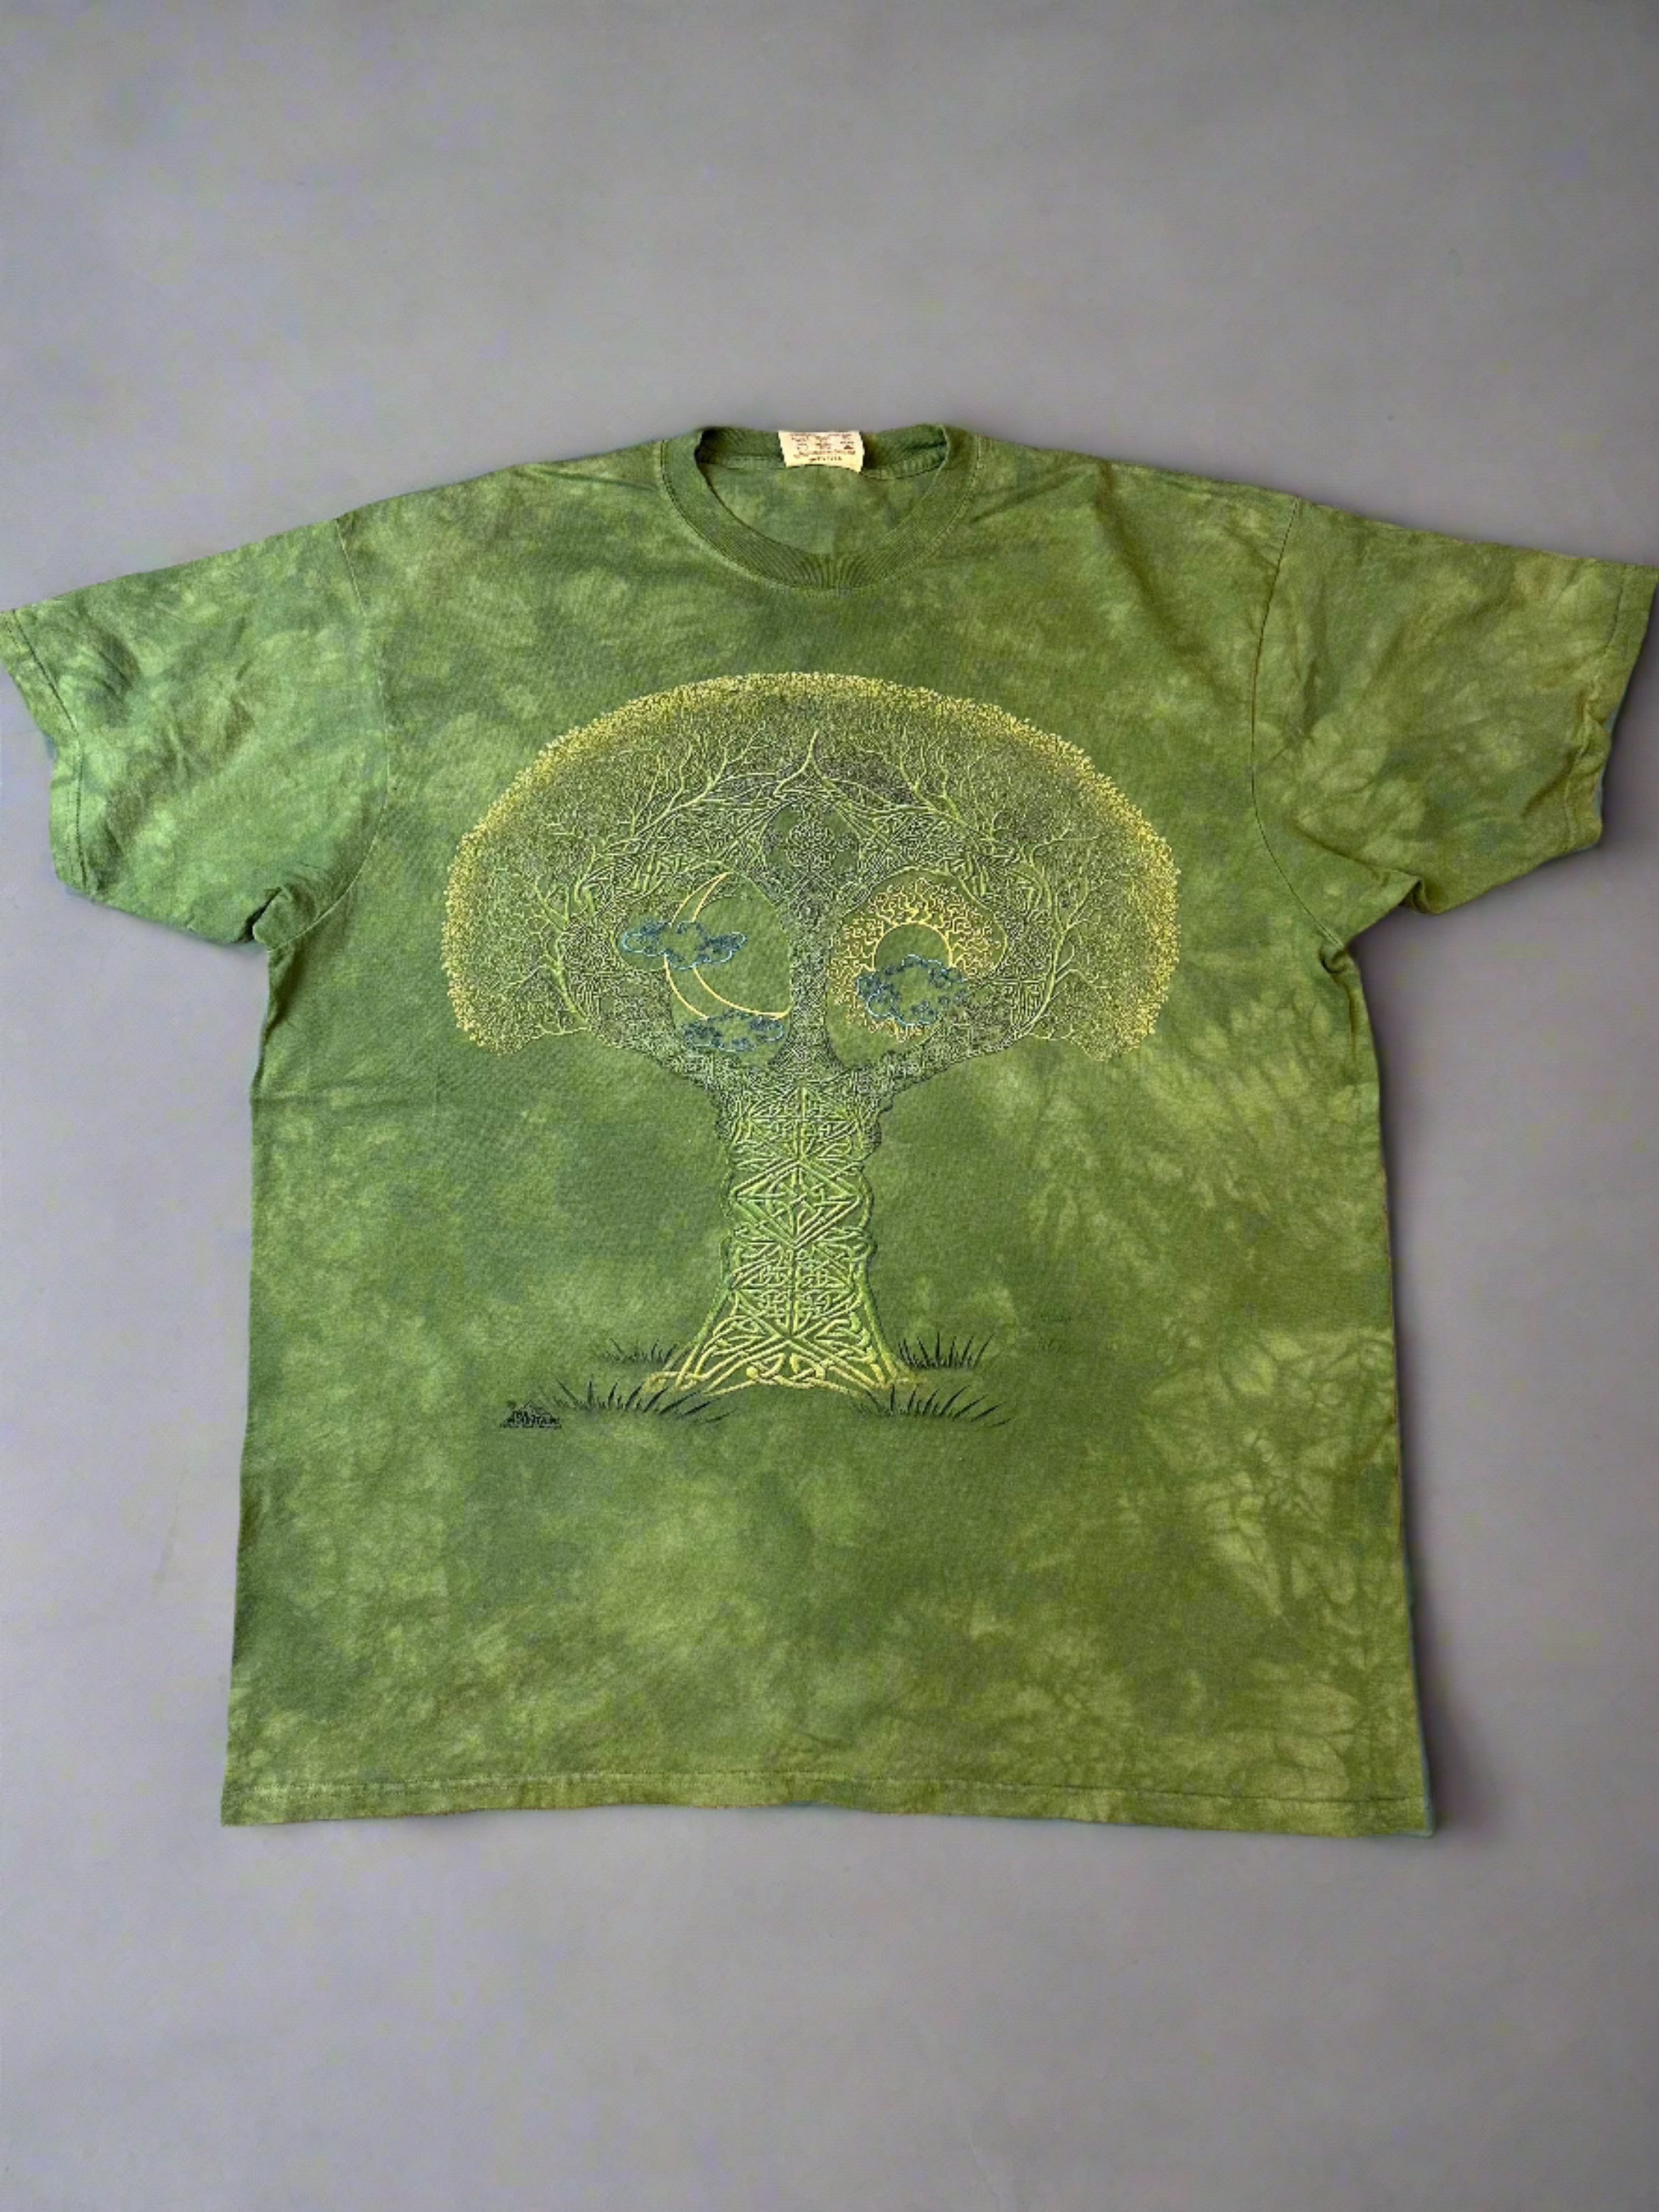 Vintage Tree T-shirt - size XL